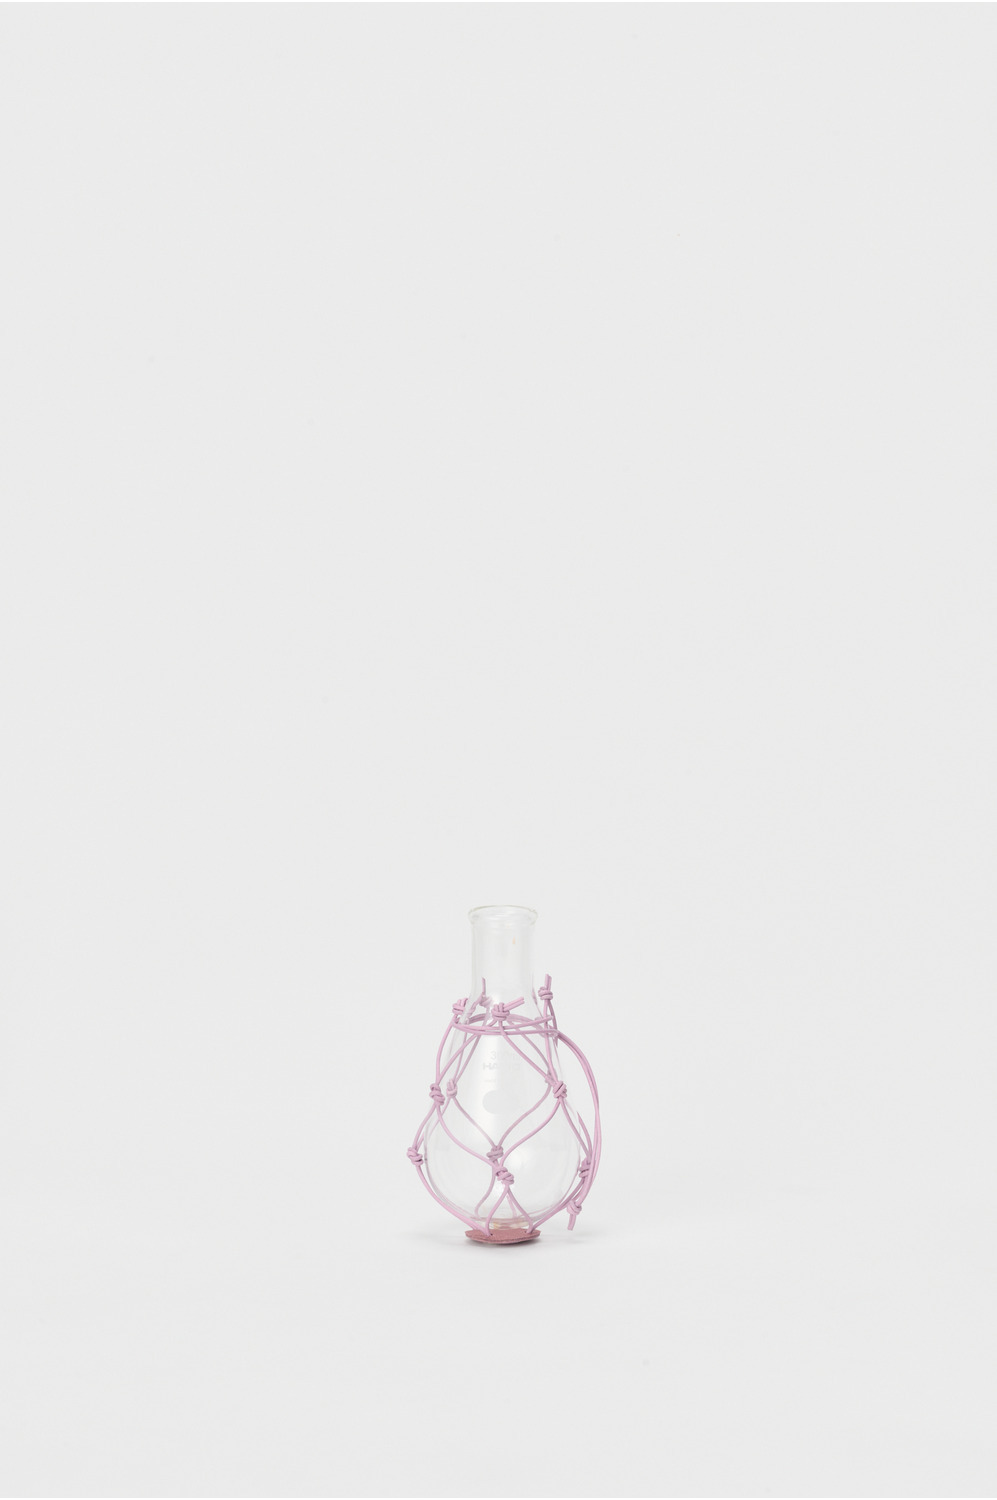 Kjeldahl flask/300ml 詳細画像 lavender 1